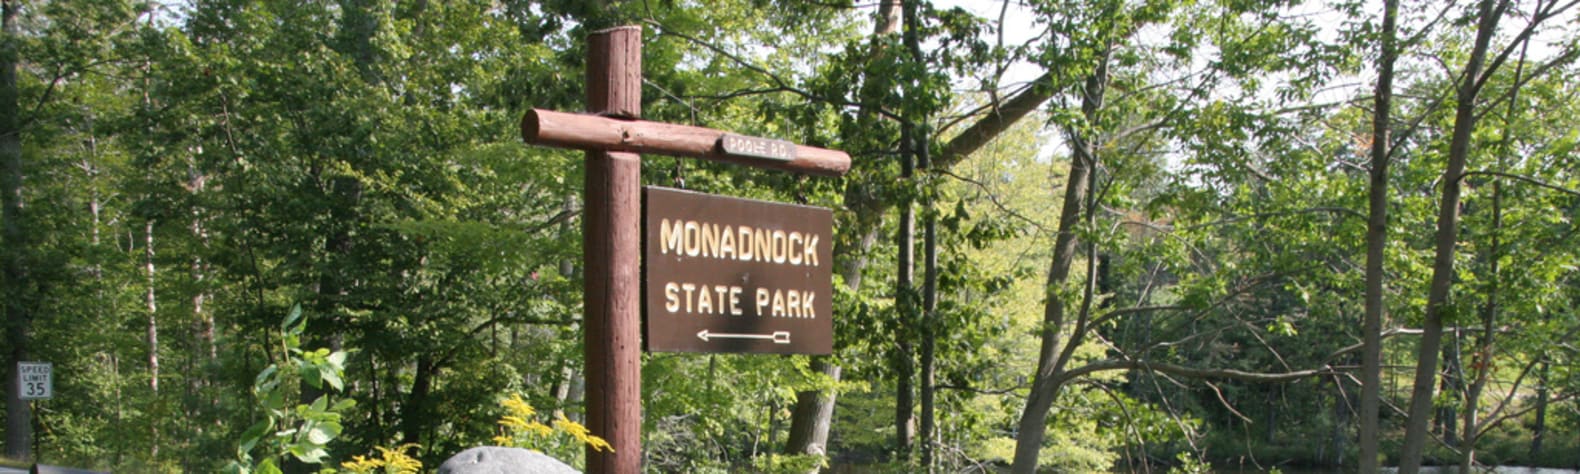 Monadnock State Park